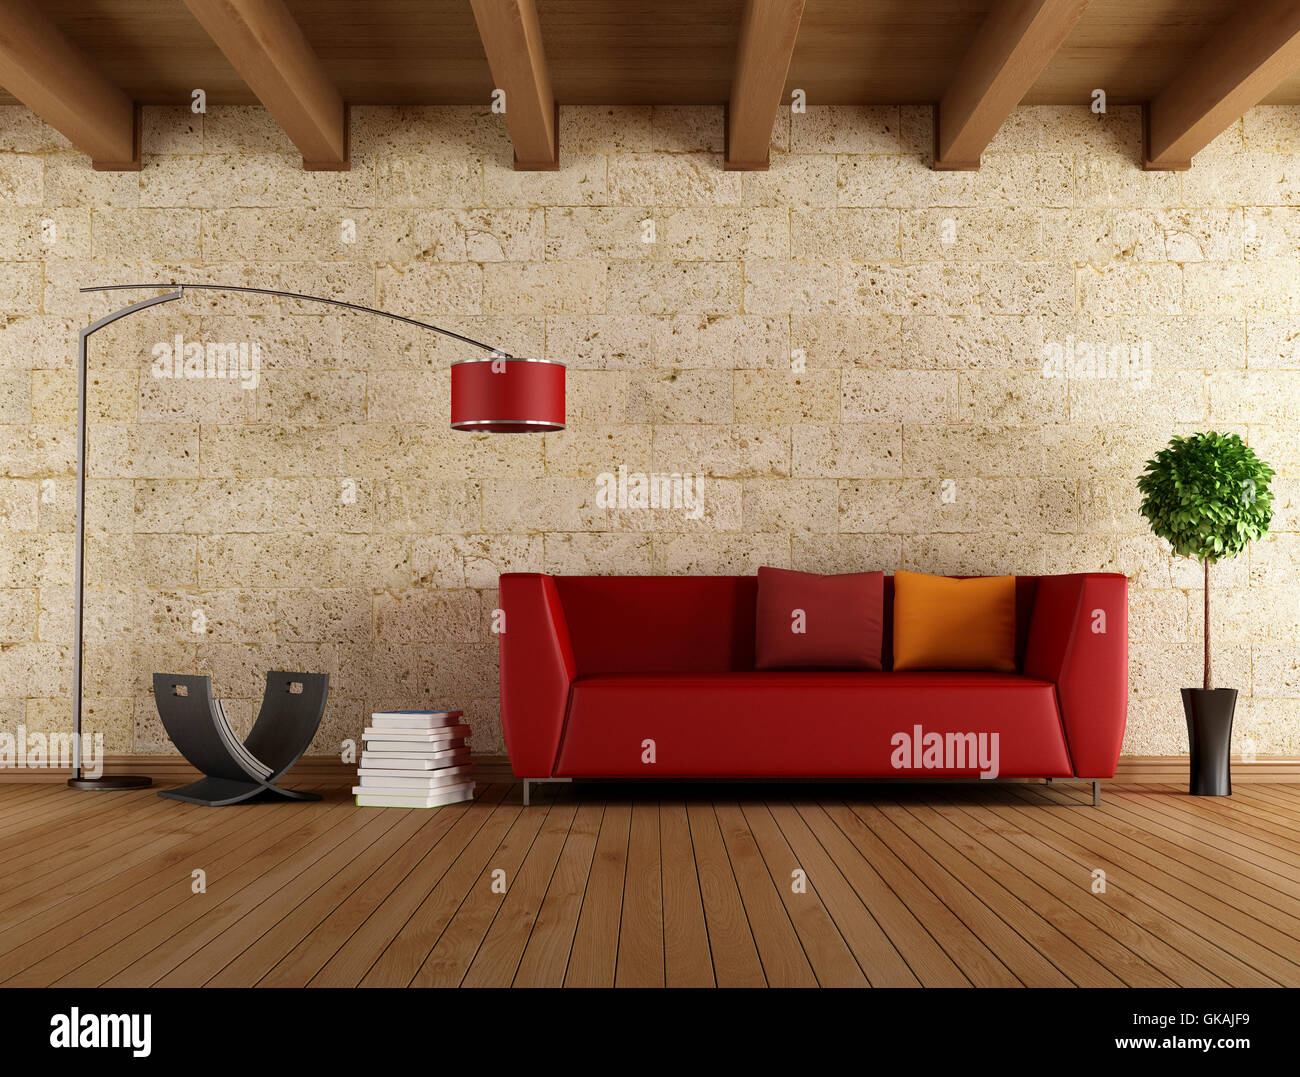 furniture stone interior Stock Photo